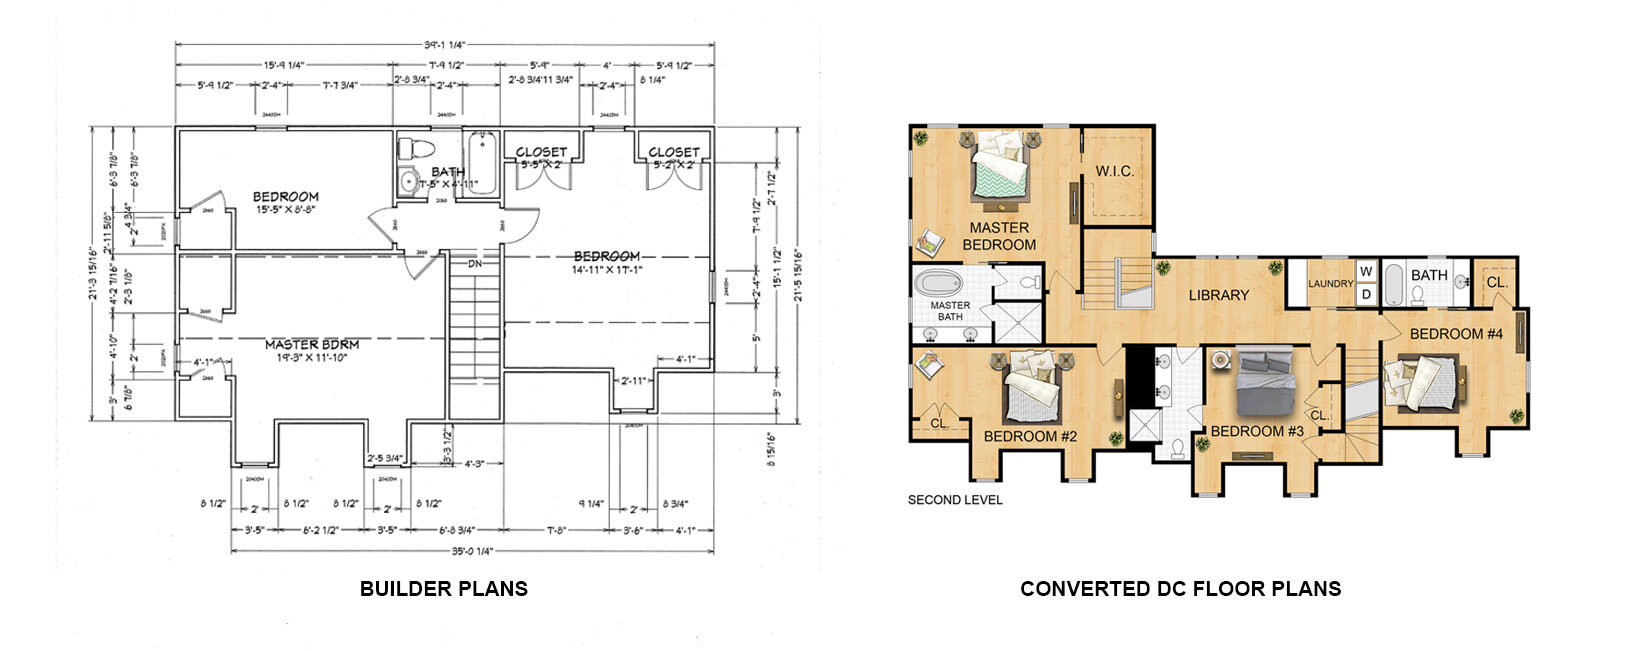 Dc Floor Plans 703 718 6504 Blueprints Sketches 3d Renderings